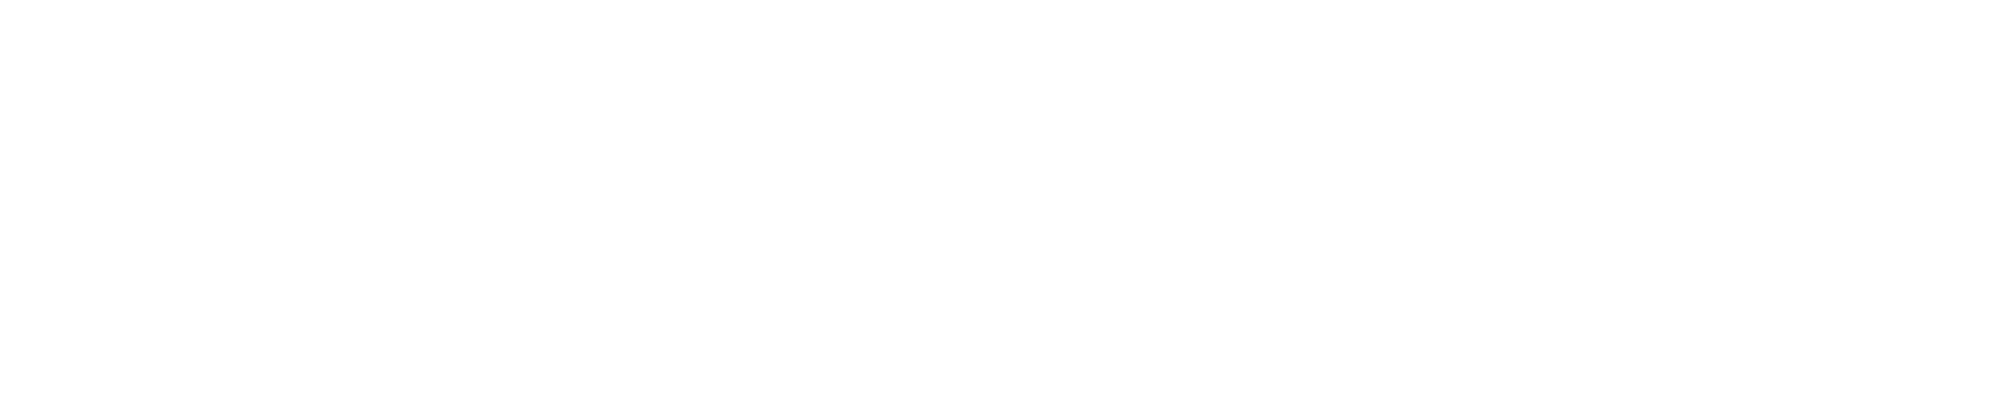 London Borough of Richmond